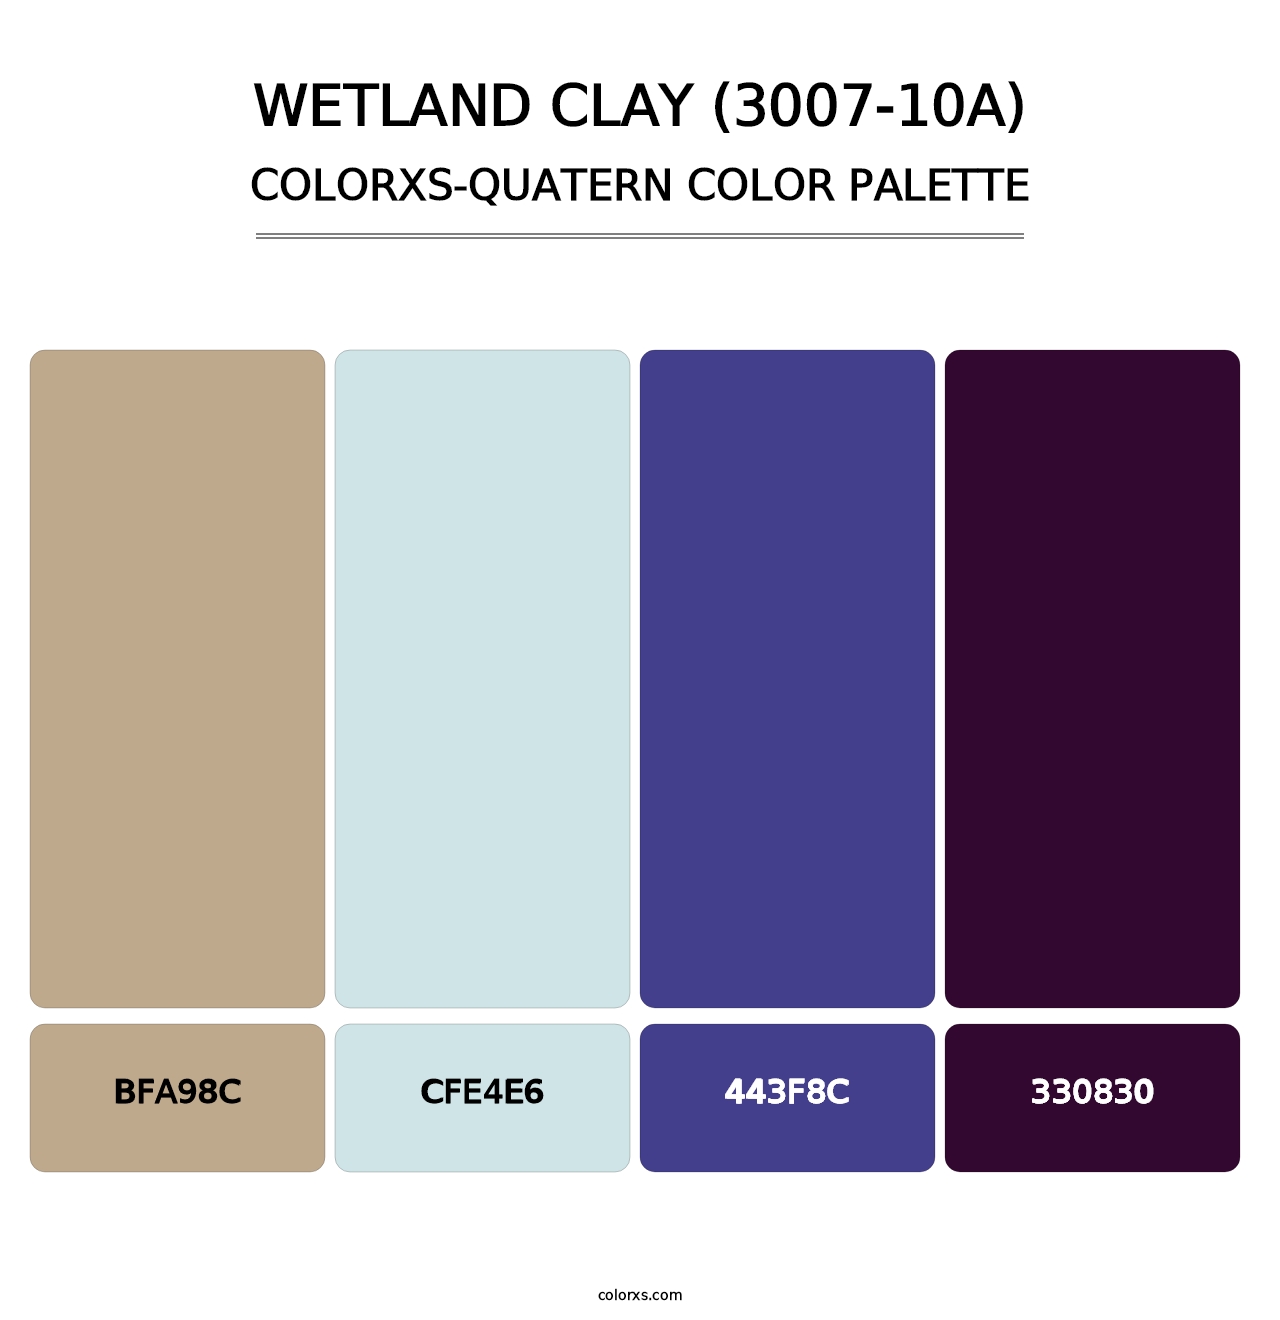 Wetland Clay (3007-10A) - Colorxs Quatern Palette